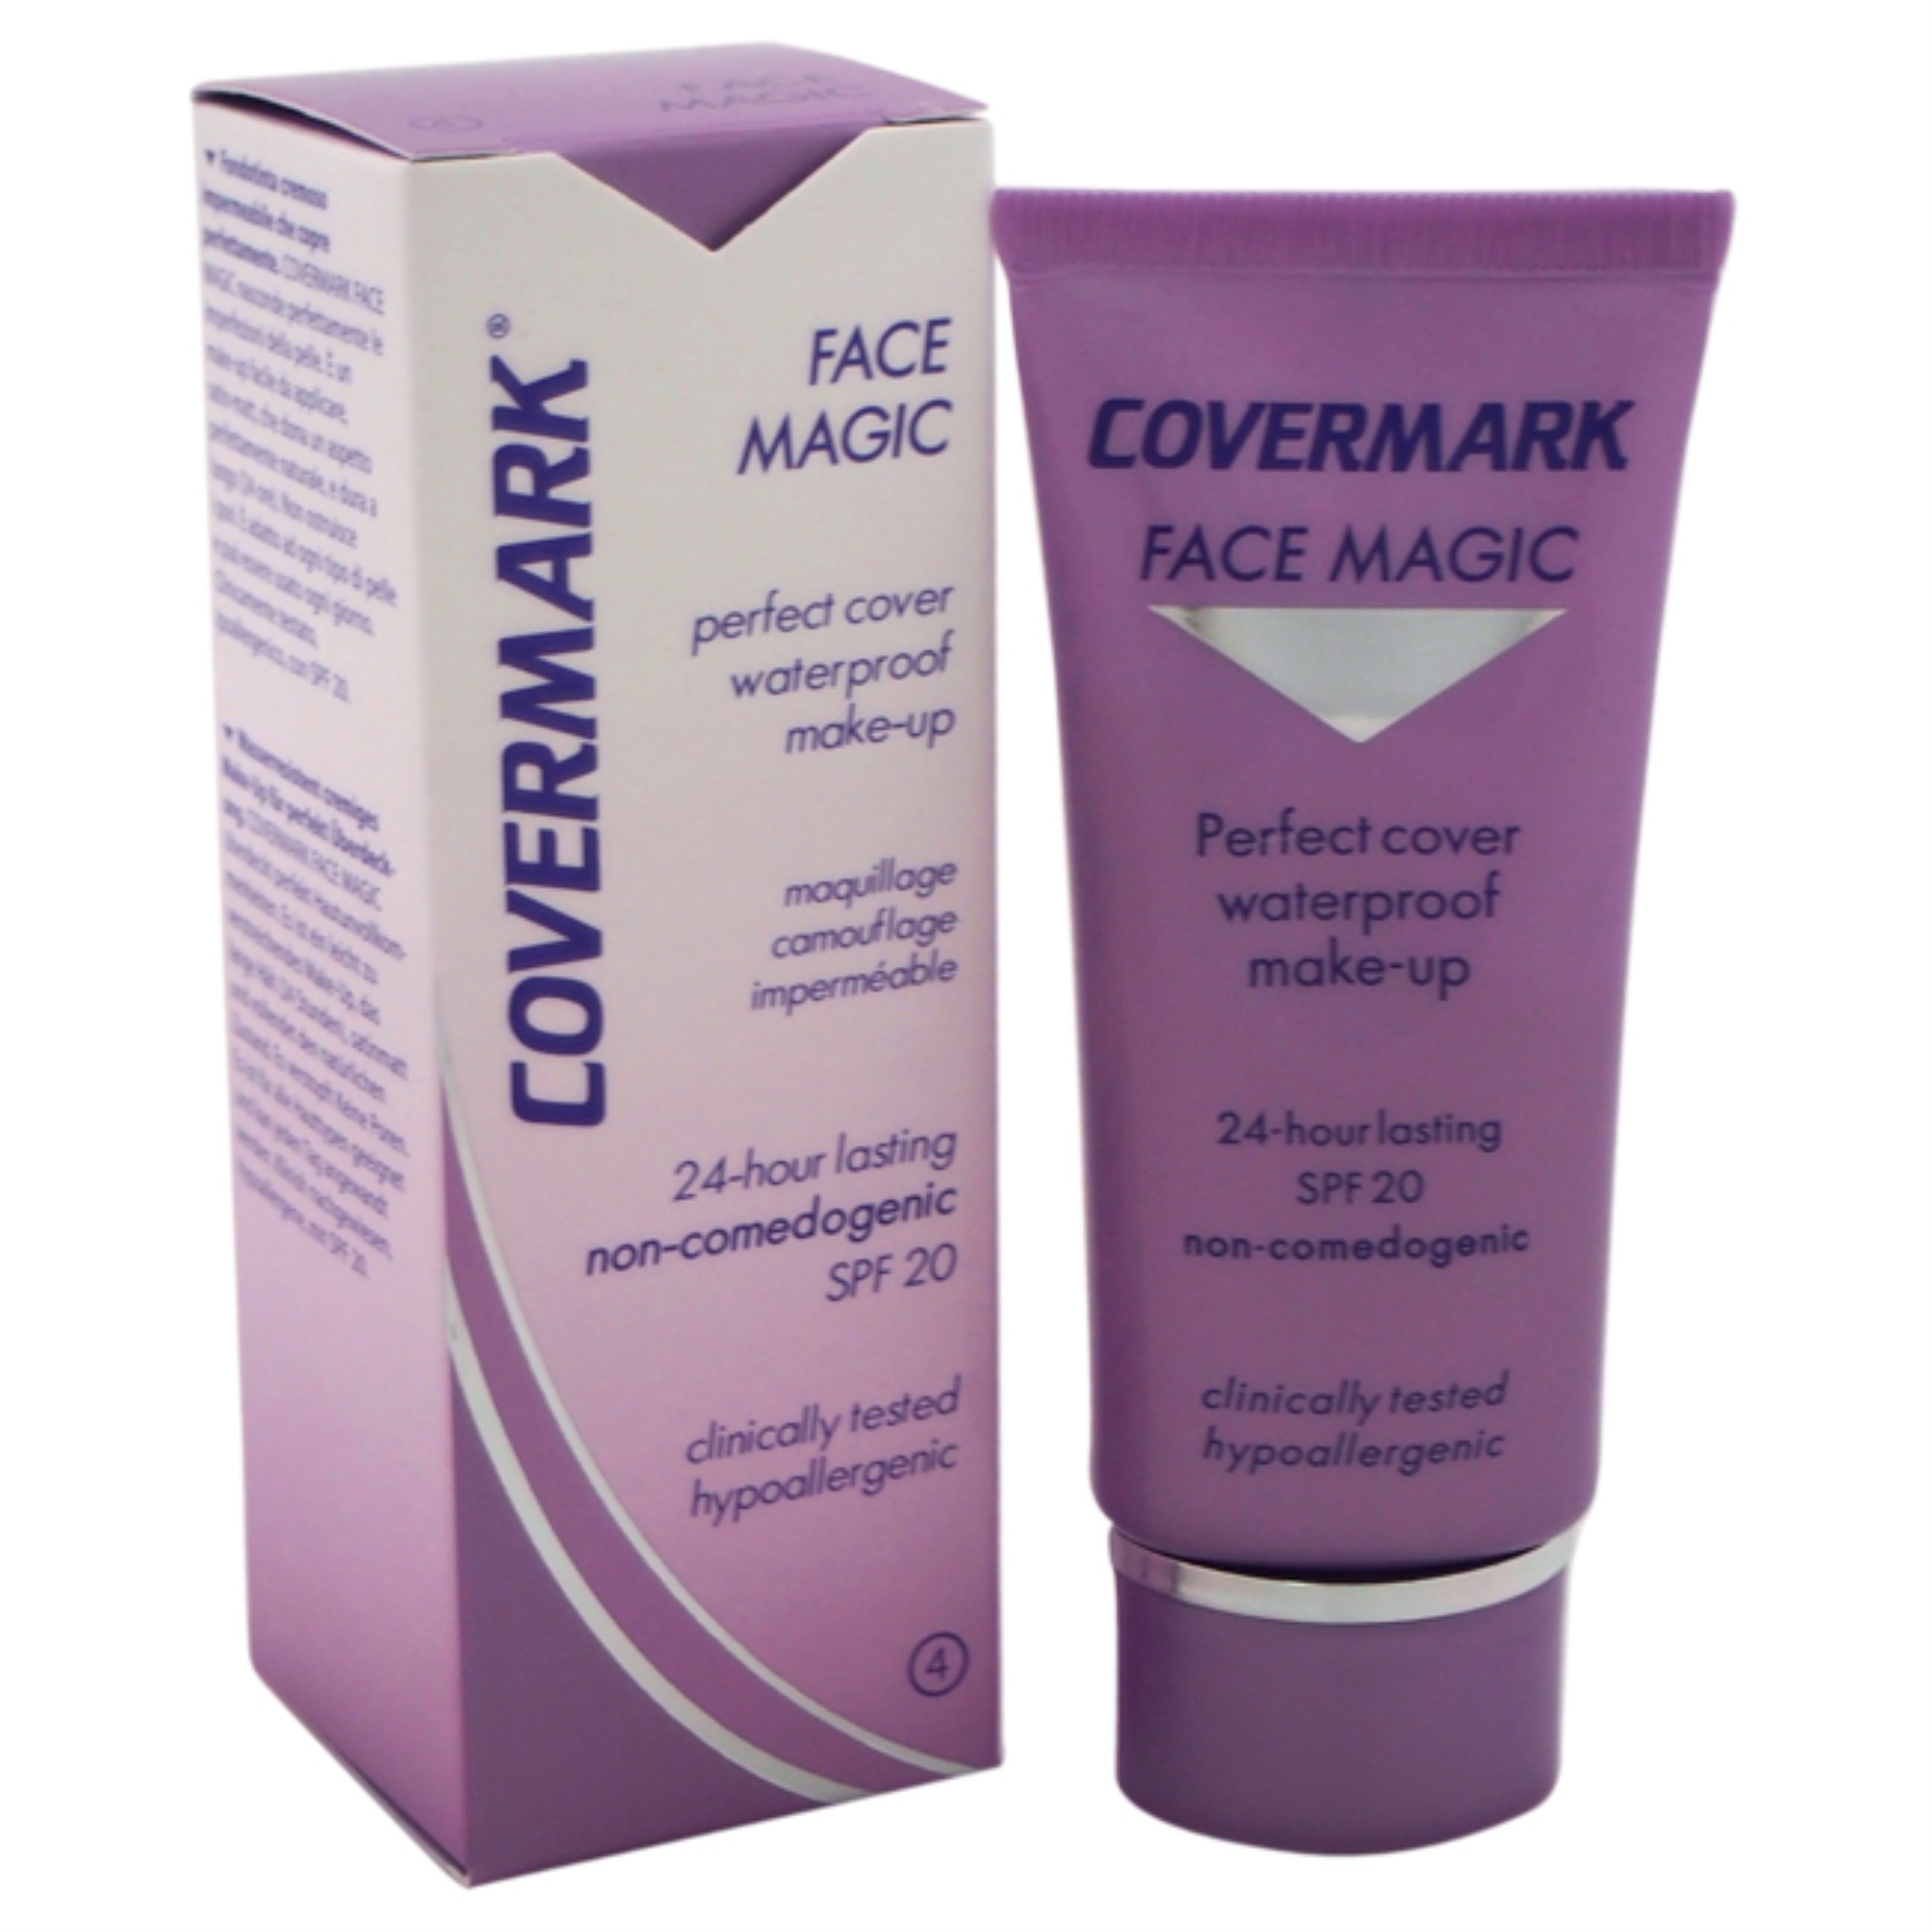 Covermark Face Magic Make-Up Waterproof SPF20 - # 4 , 1.01 oz Makeup - image 1 of 1